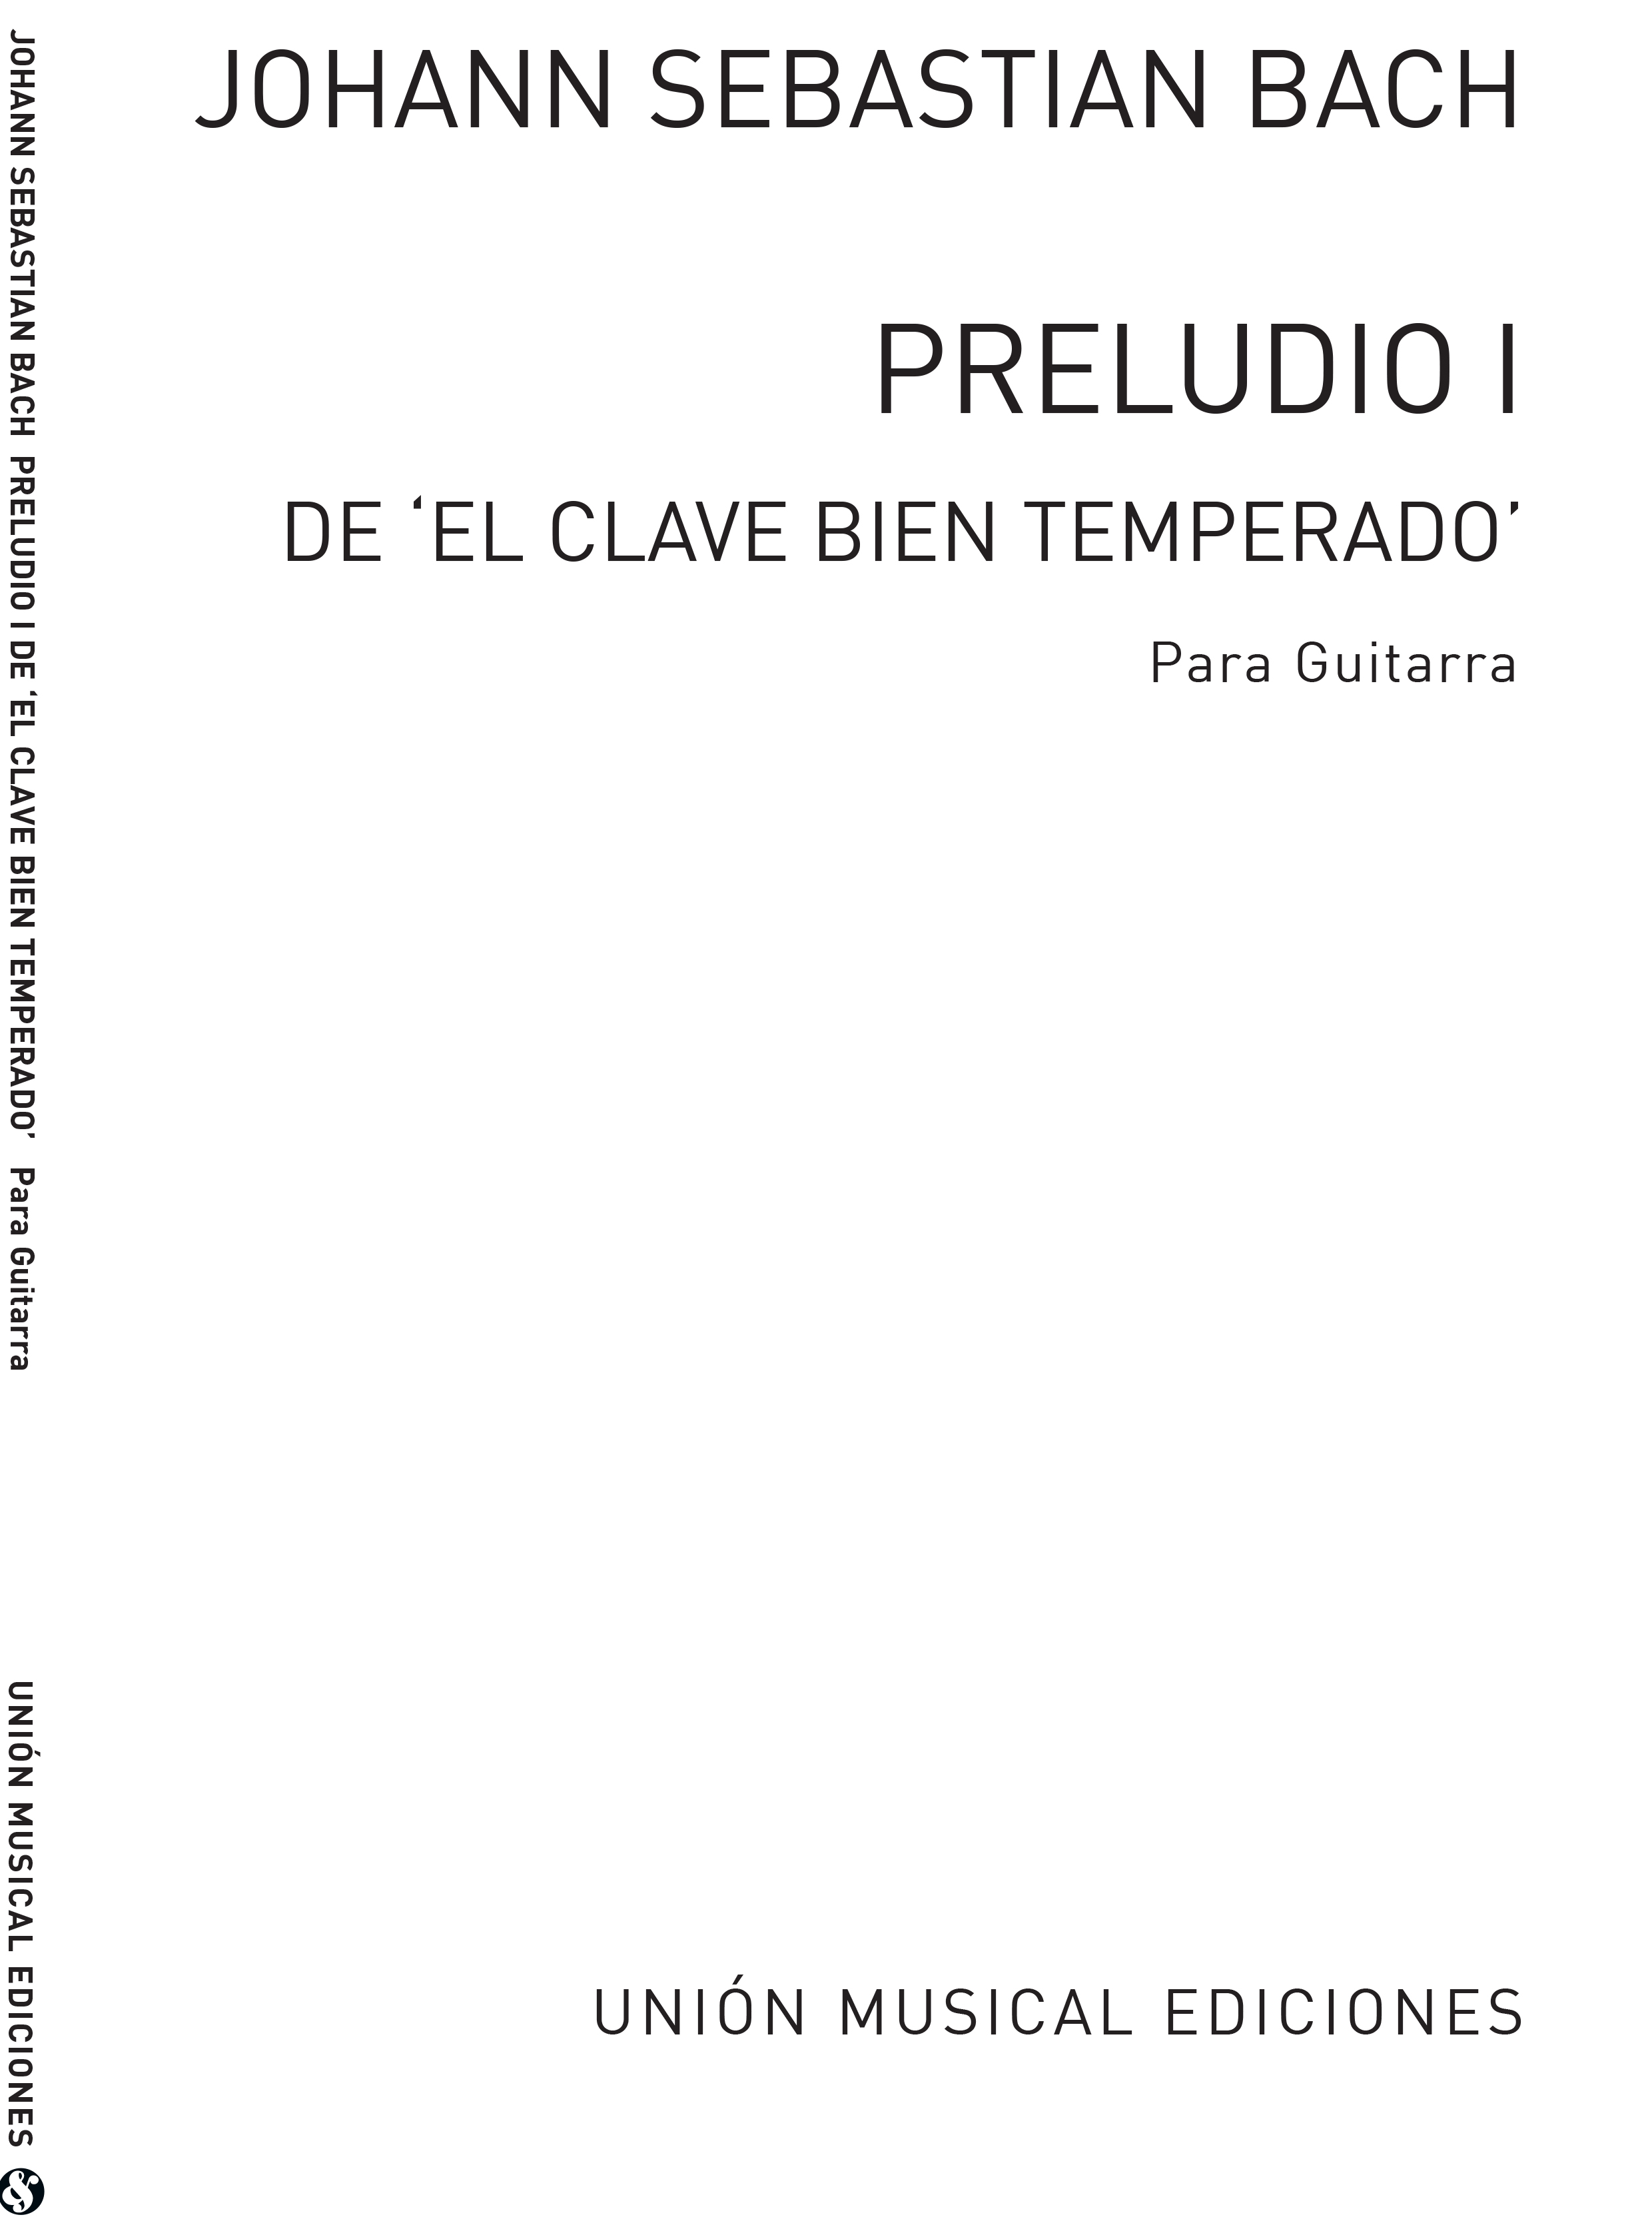 Johann Sebastian Bach: Preludio No.1 Clave Bien Temperado Volume 1: Guitar: